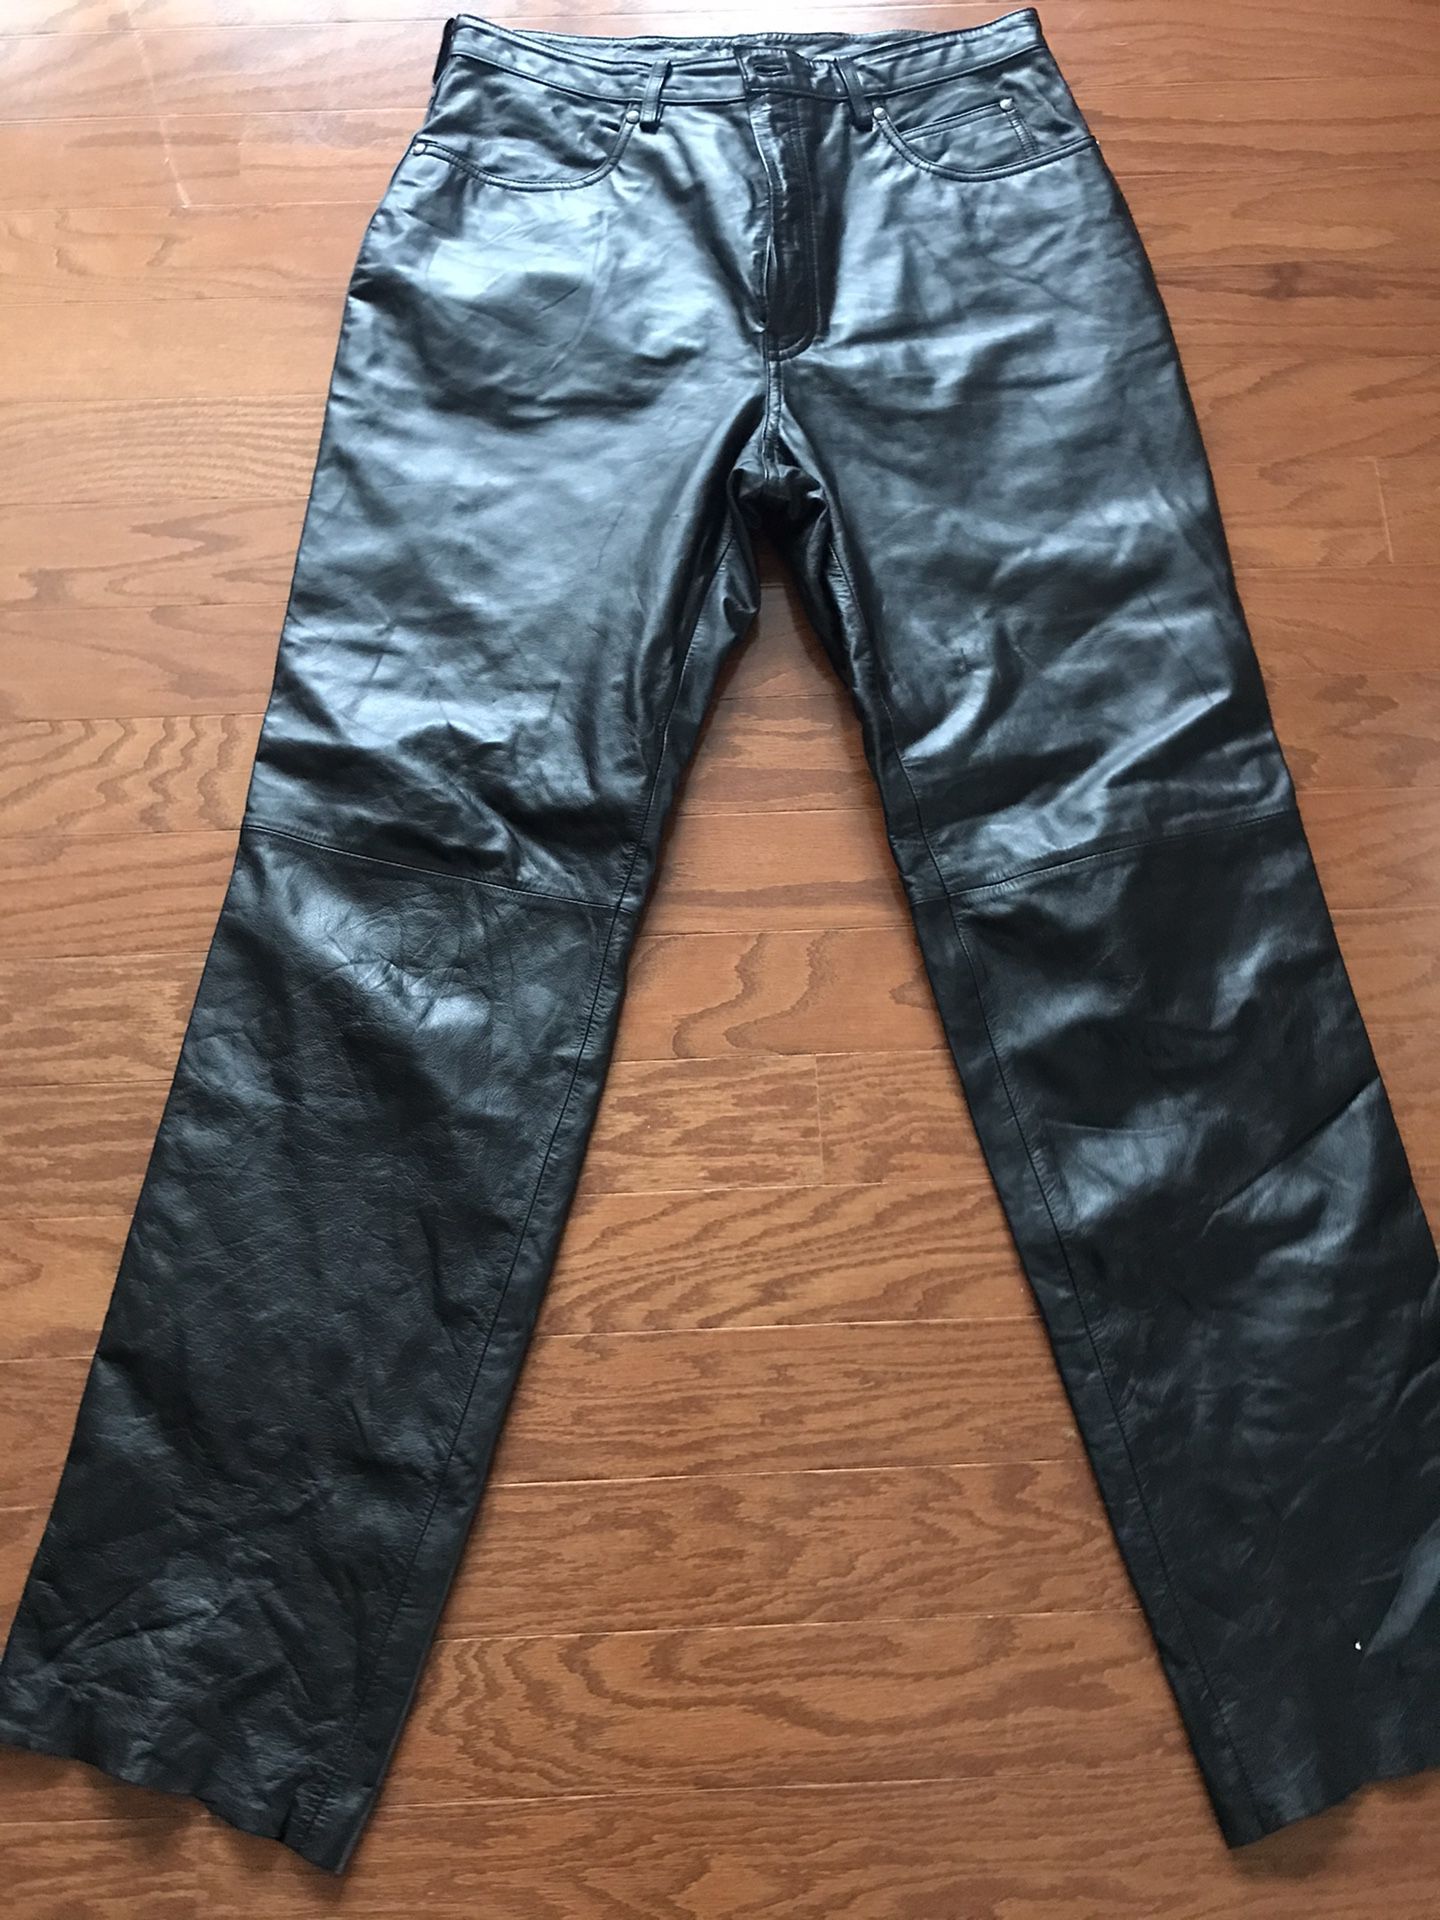 Men’s Harley Davidson Leather Pants size 34